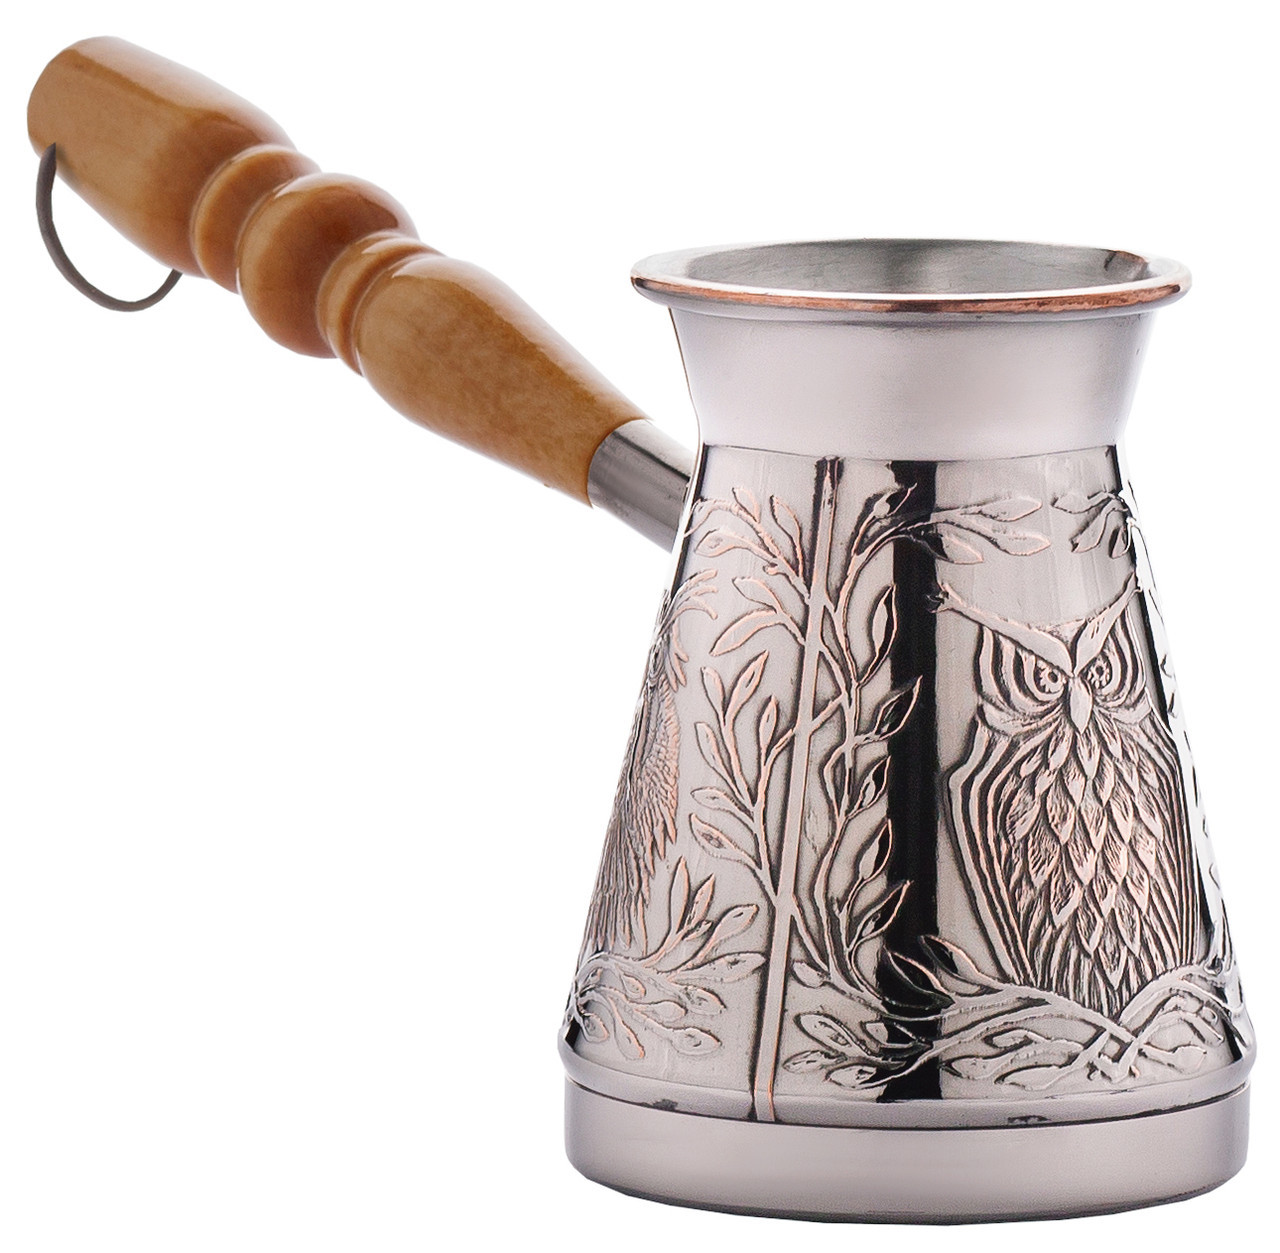 Вайлдберриз турки для кофе. Турка для кофе медная джезва. Турка для кофе медная «гранат», 0,4 л 3919943. Турка tima орнамент ор-400 (0.4 л). Турка для кофе 0,4л tima орнамент медная.